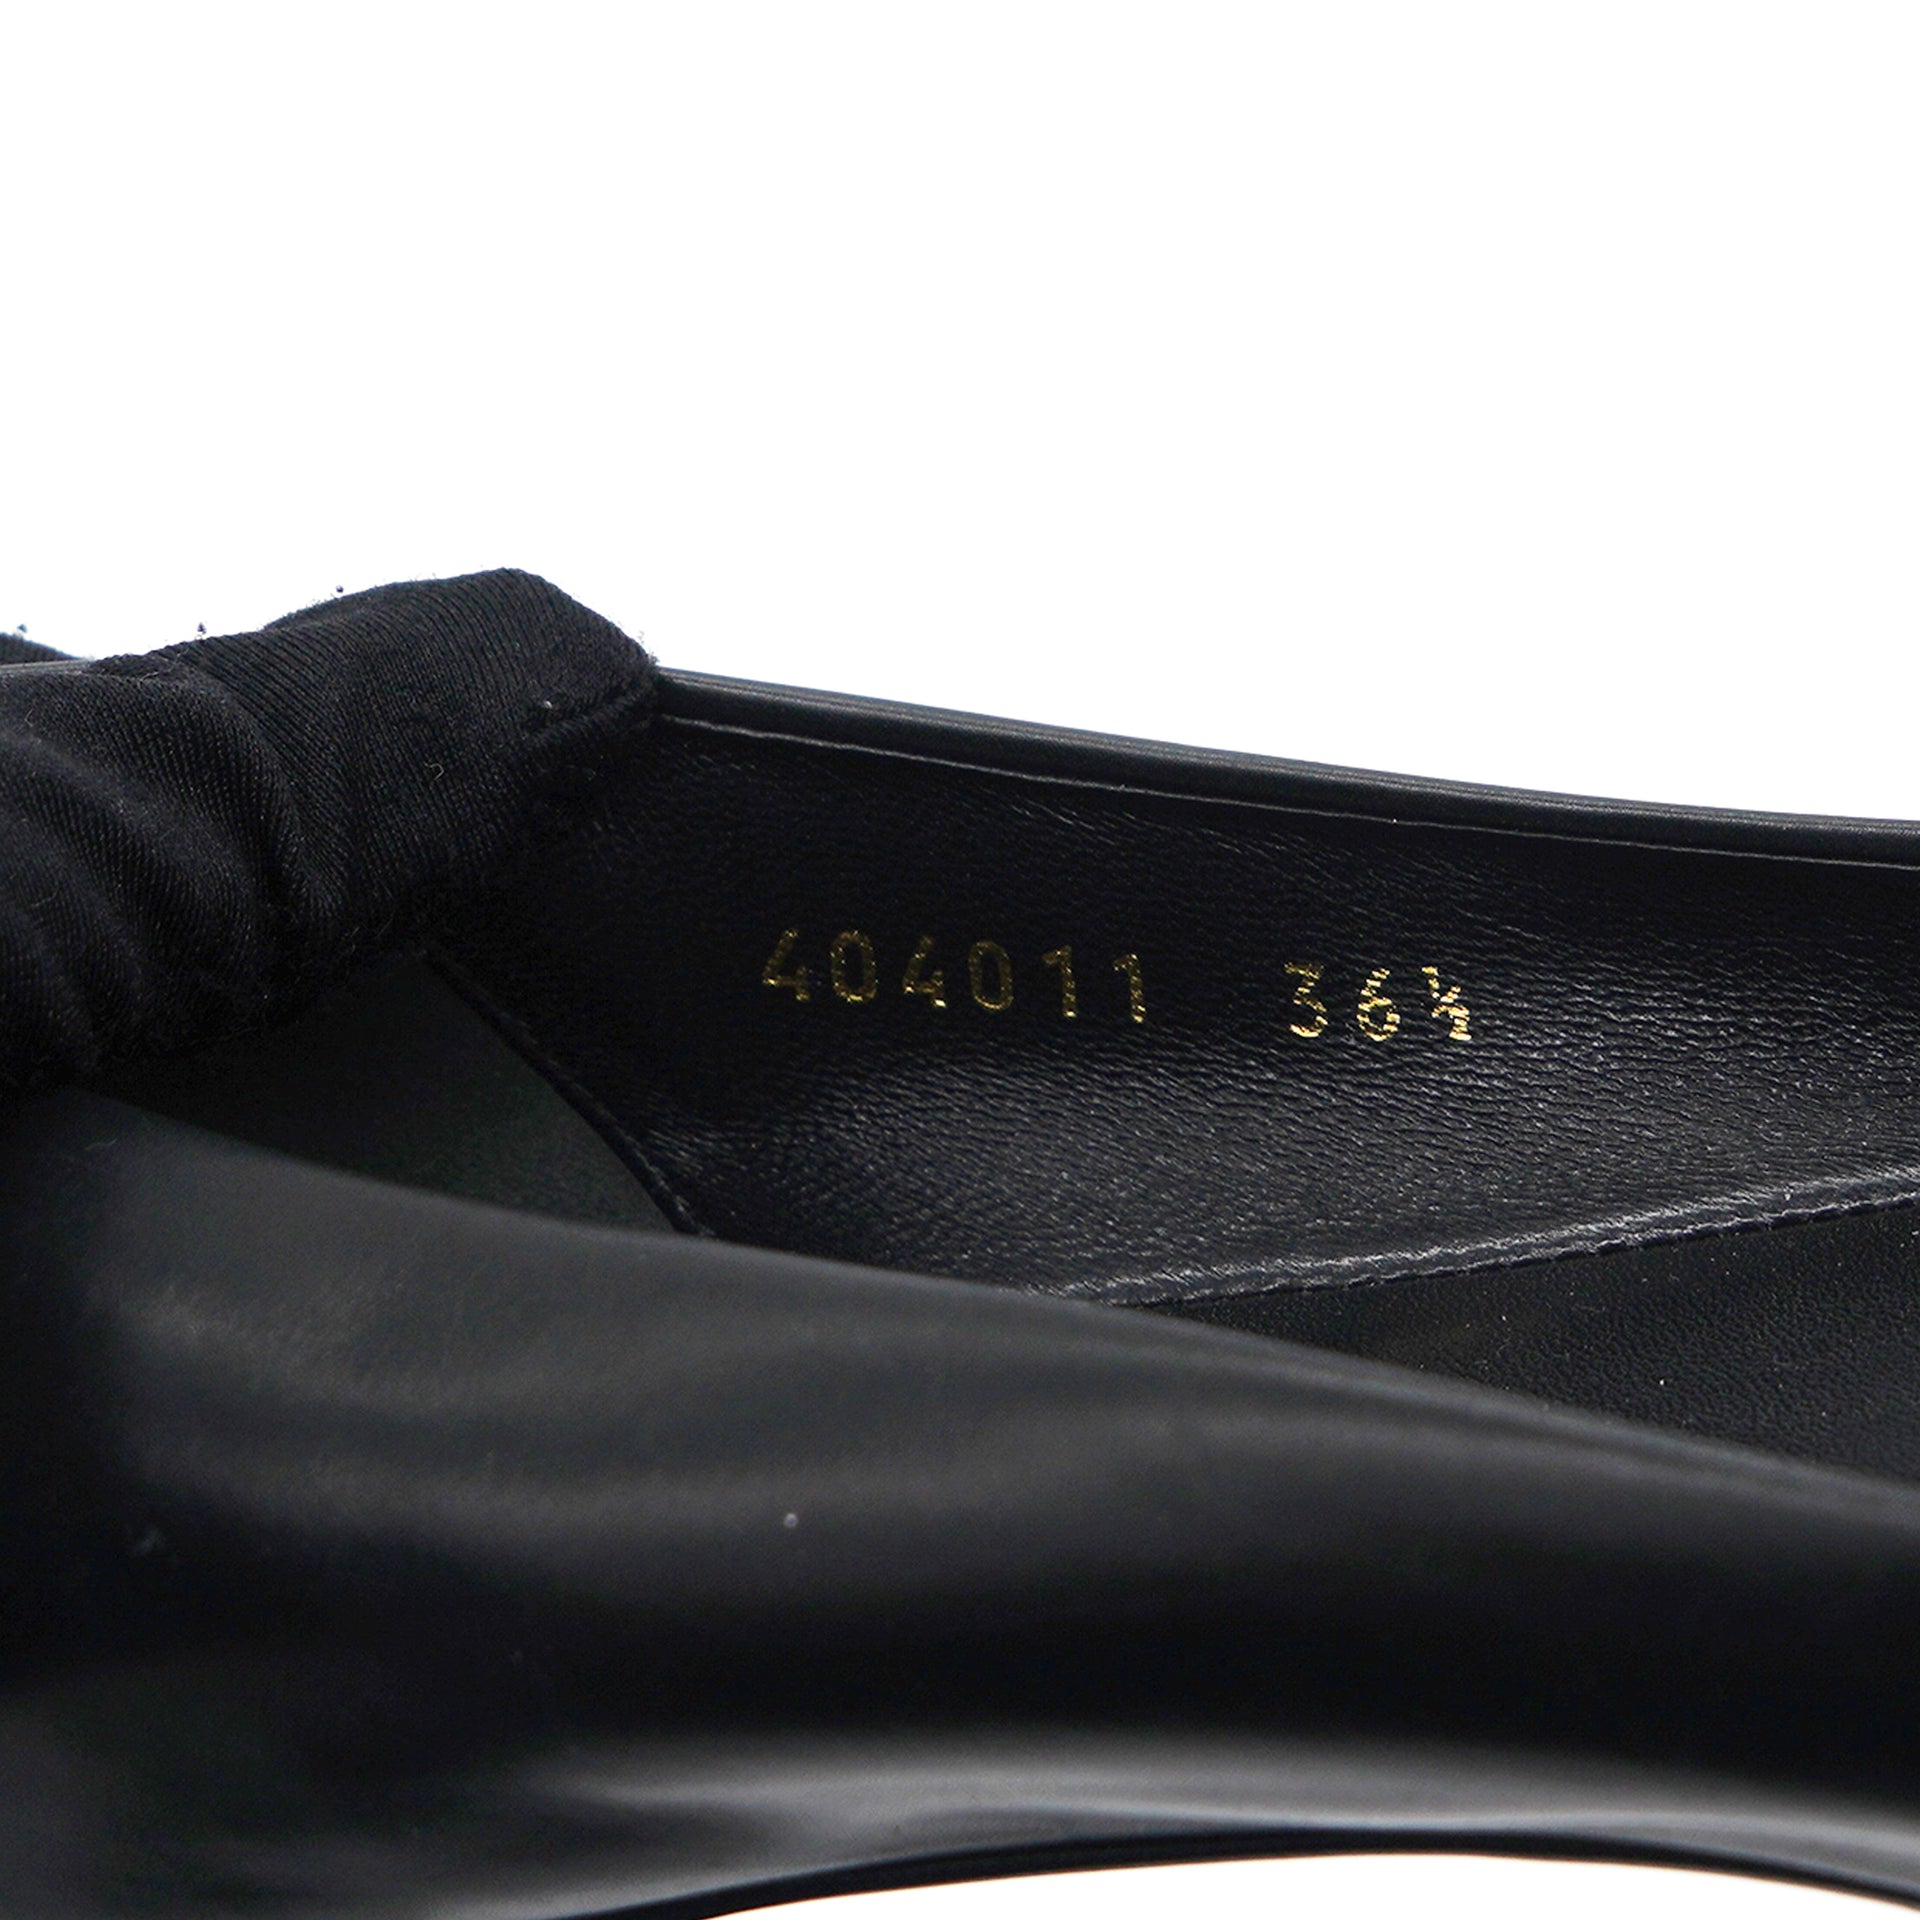 Black Calfskin Leather Pom Pom Ballet Flats Size 36.5